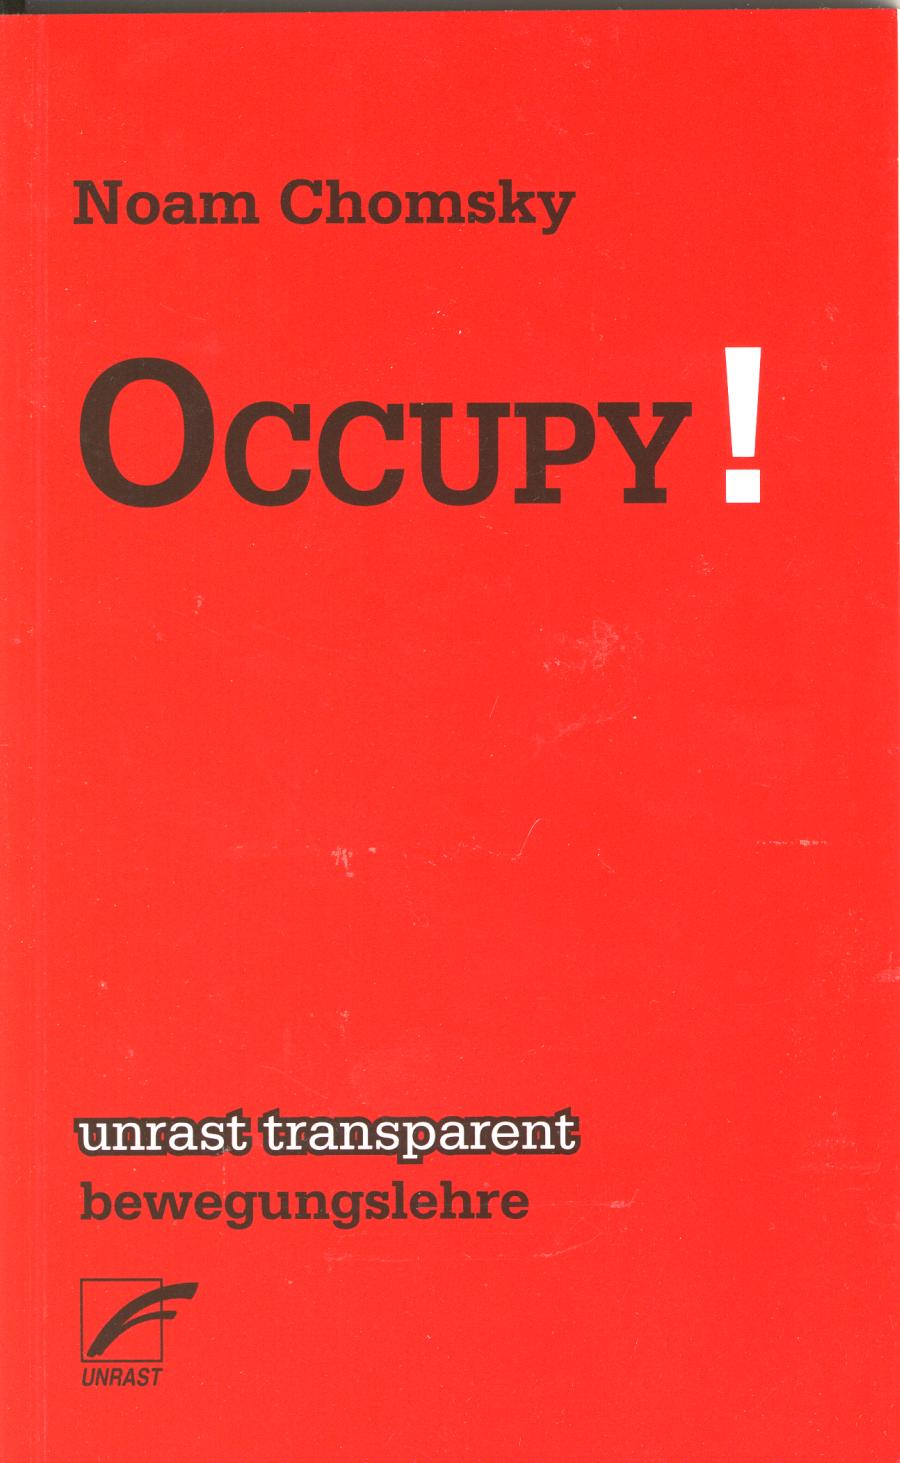 "Occupy!"